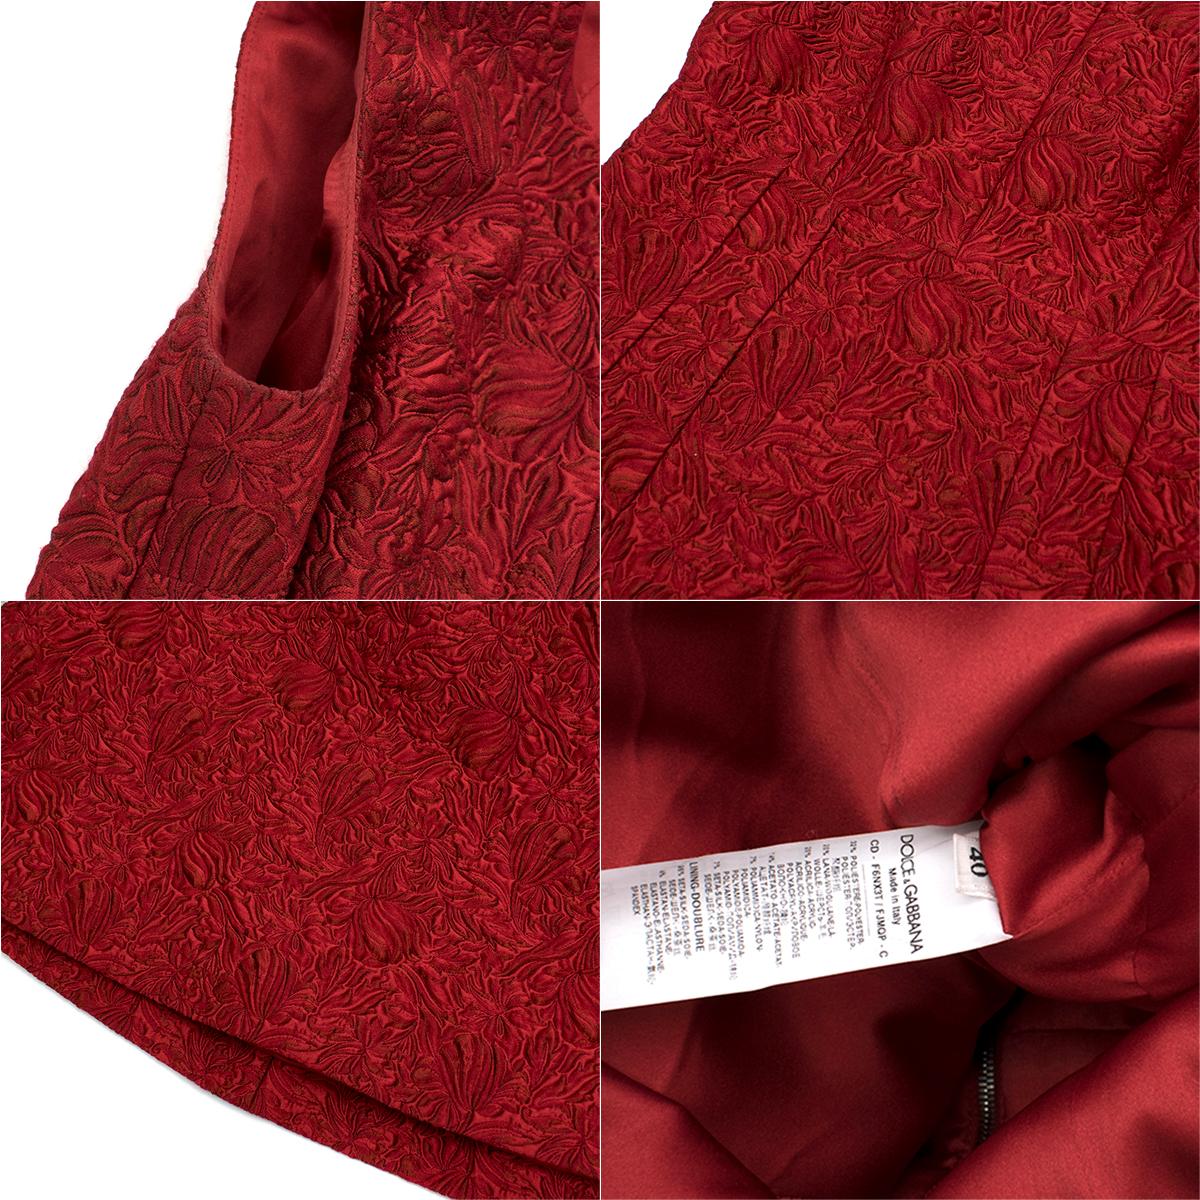 Dolce & Gabbana Red Floral Brocade Dress SIZE 40 IT 1